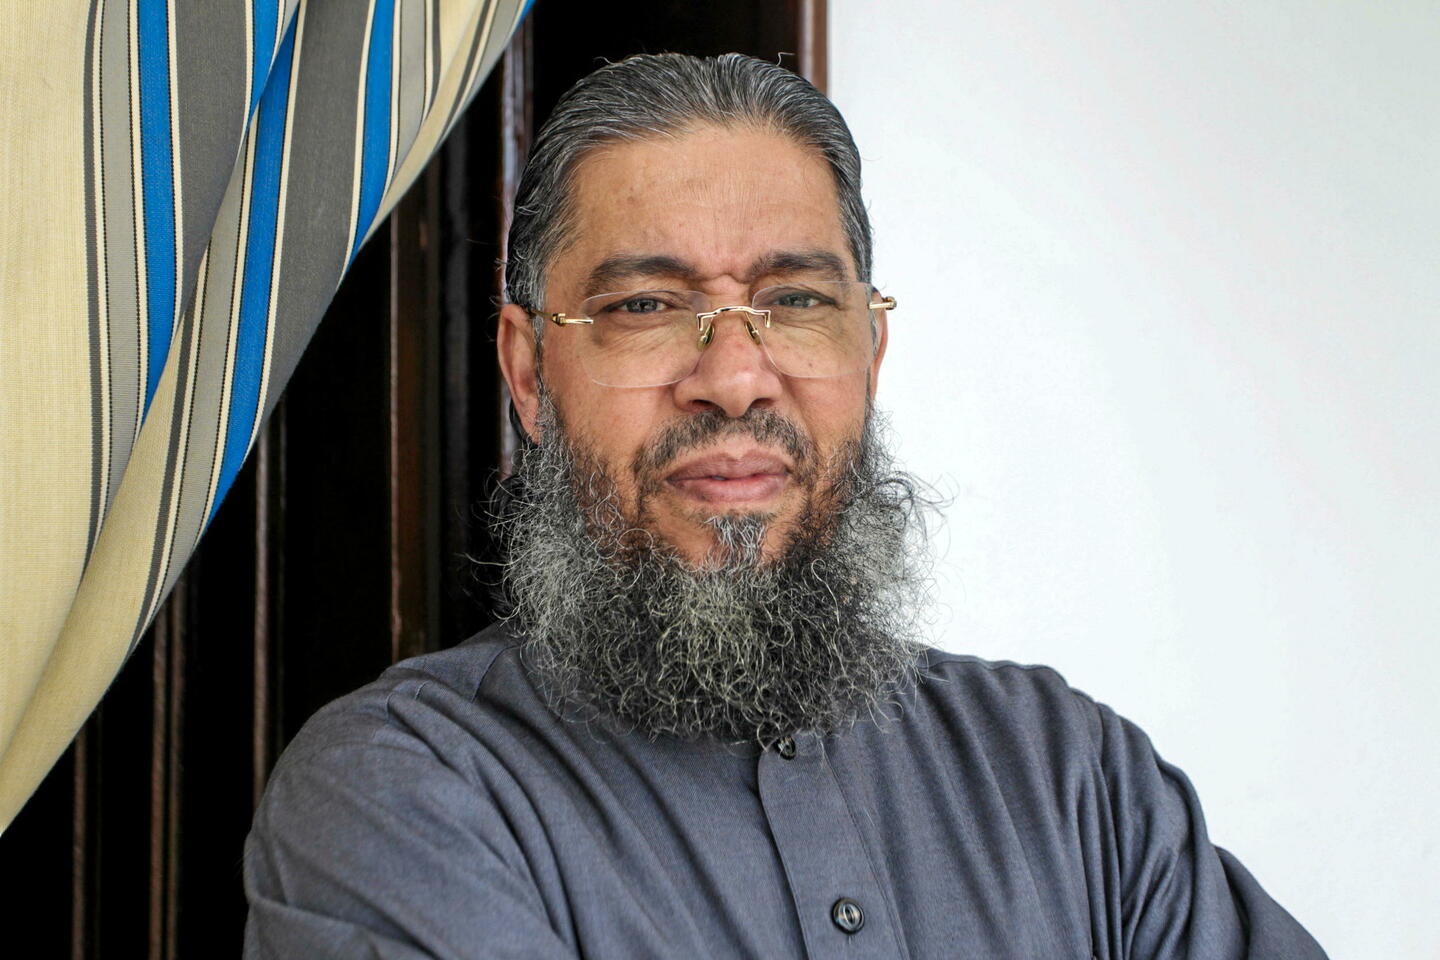 expulsion de mahjoub mahjoubi : le recours de l’imam en référé-liberté examiné vendredi